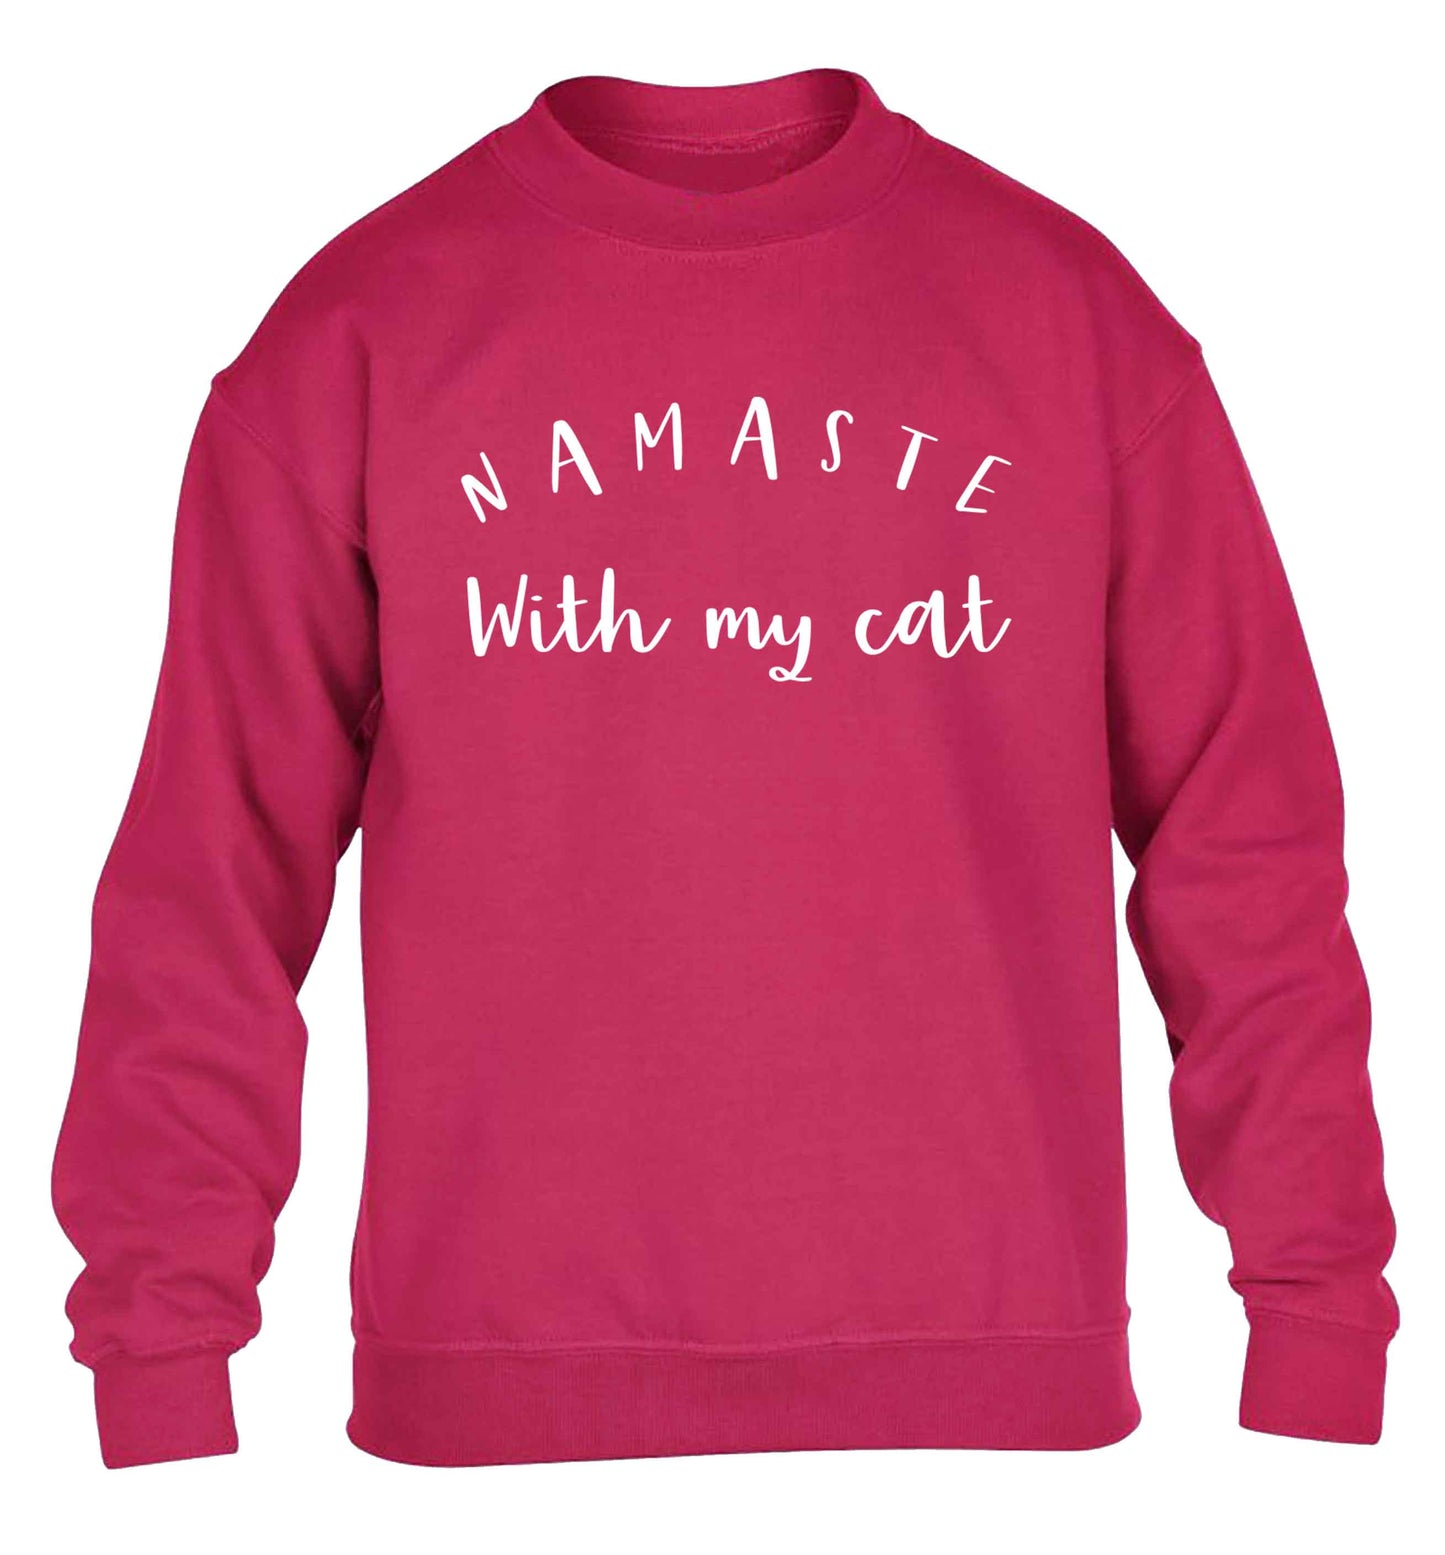 Namaste with my cat children's pink sweater 12-13 Years